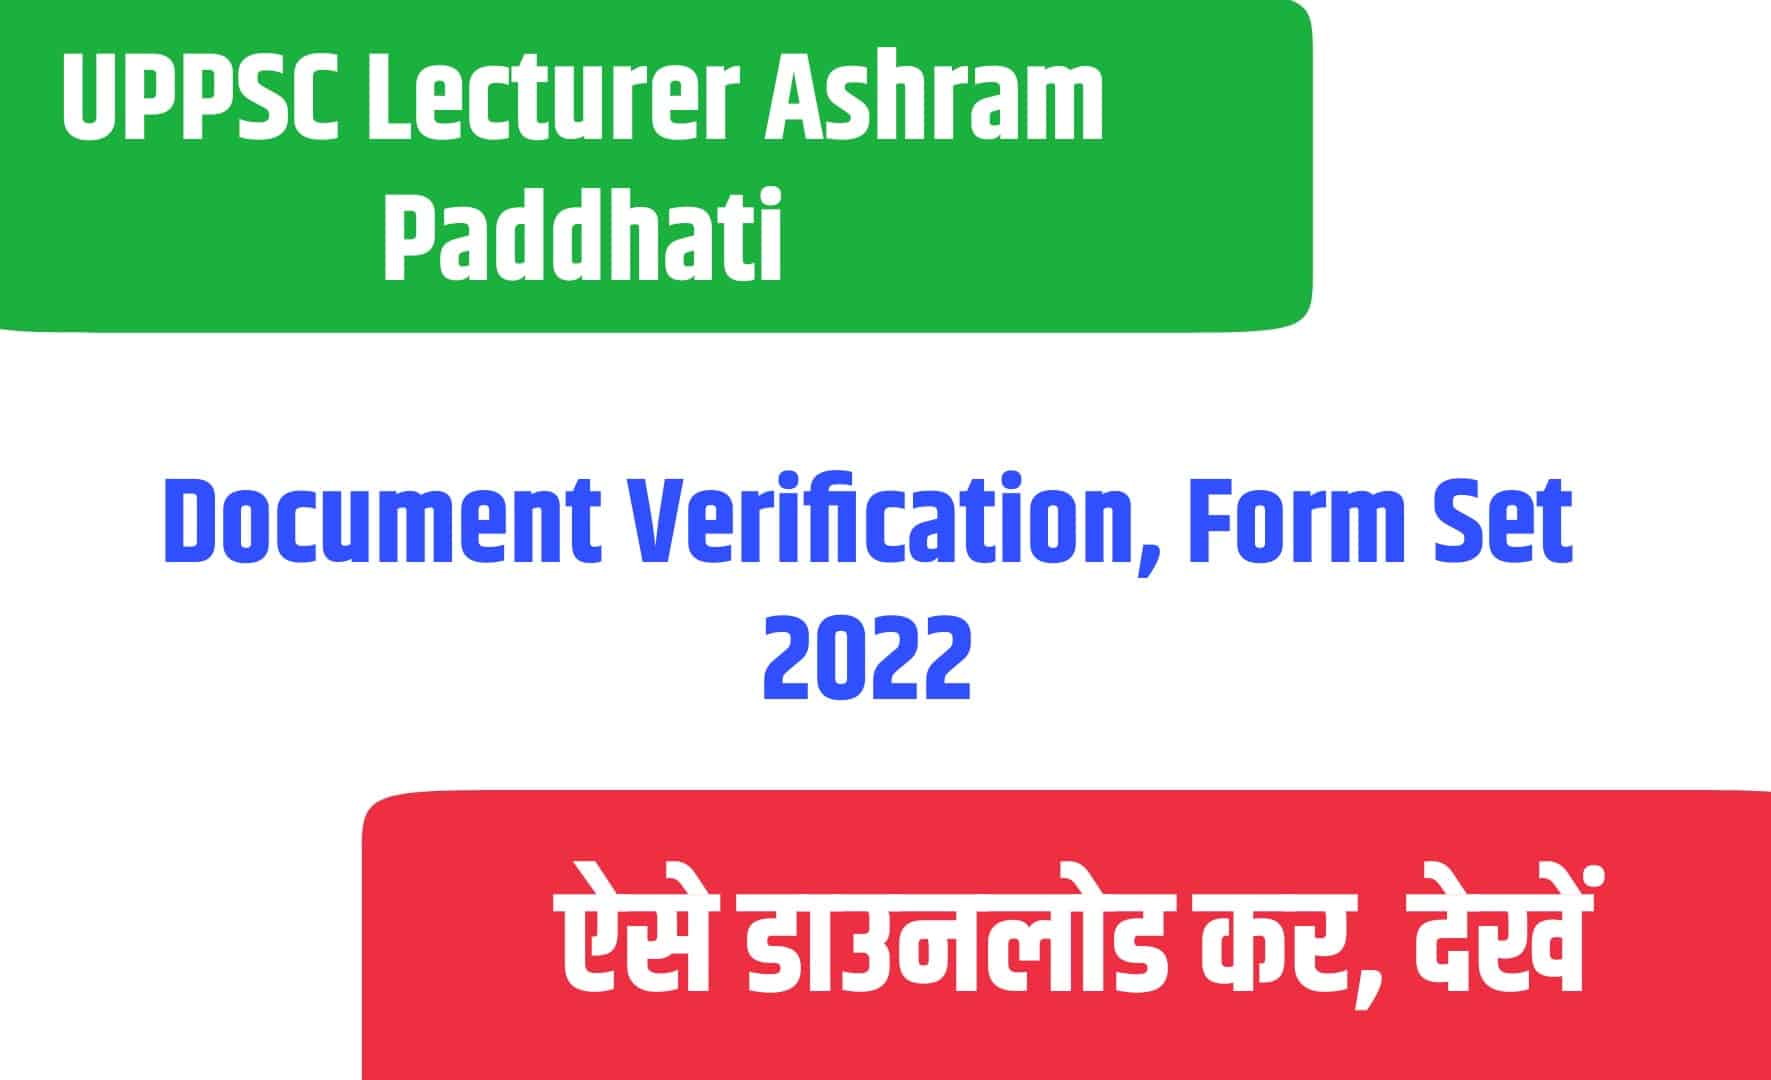 UPPSC Lecturer Ashram Paddhati Document Verification, Form Set 2022 | यूपीपीएससी लेक्चरर आश्रम पद्धति दस्तावेज सत्यापन एडमिट कार्ड जारी